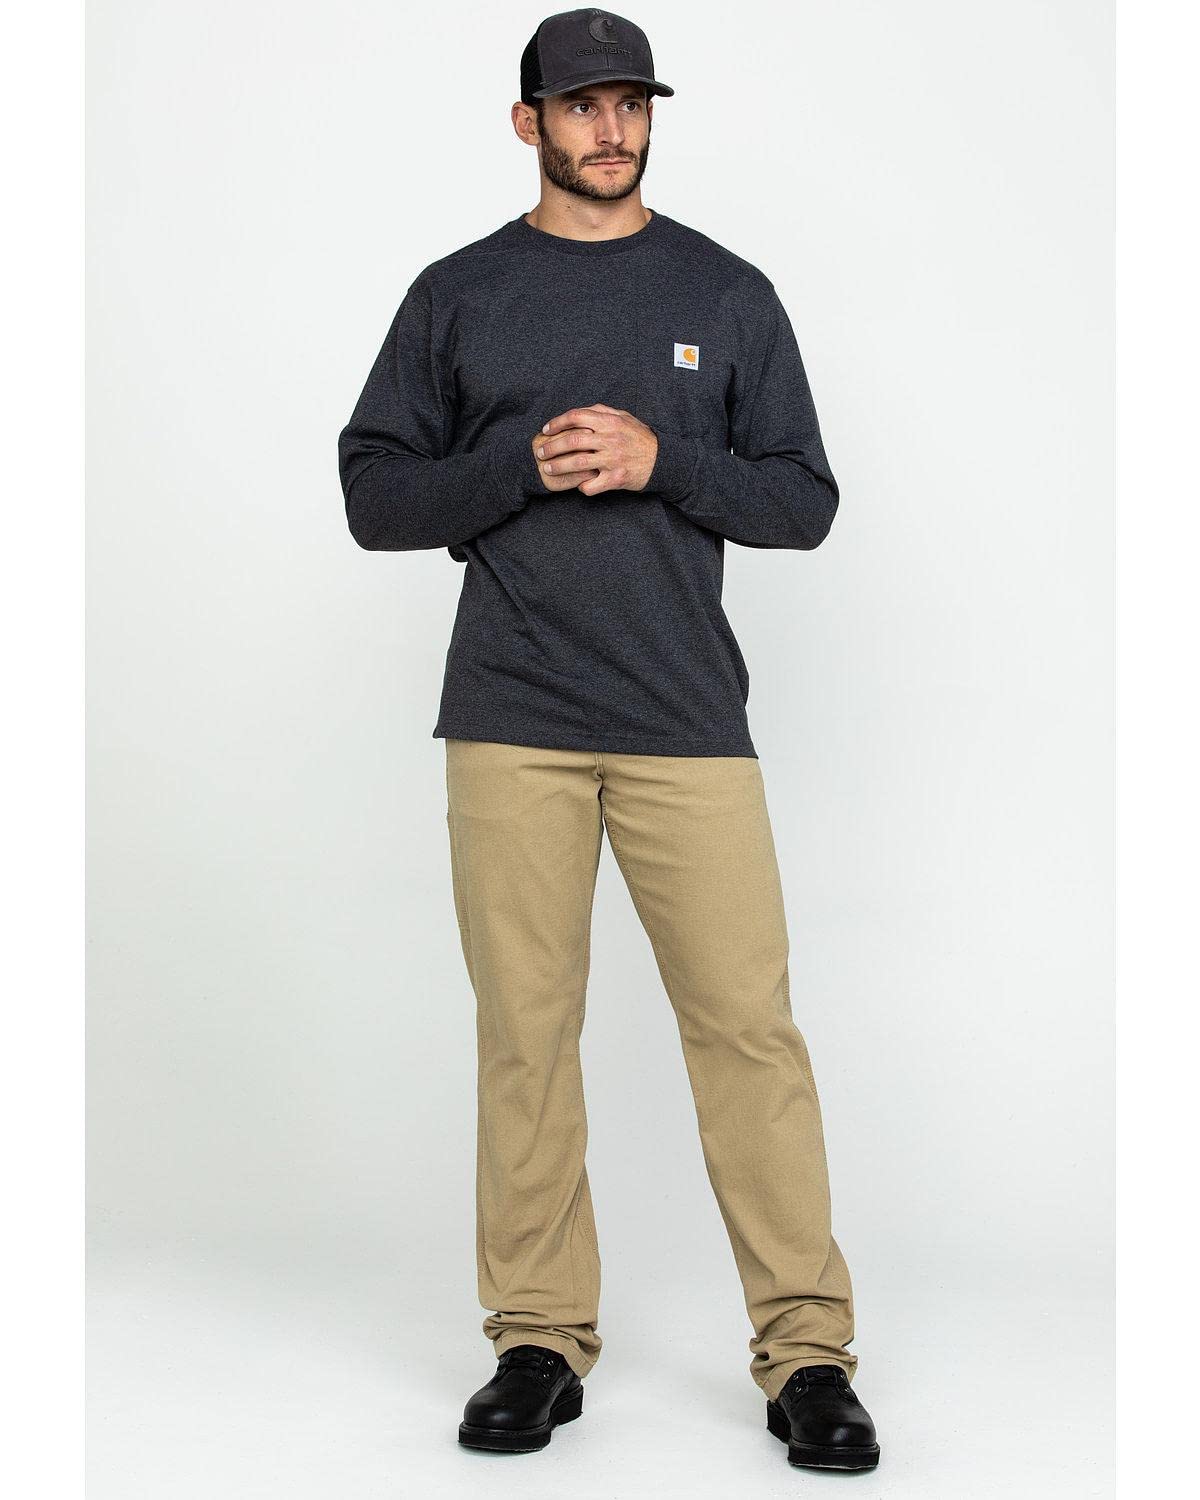 Carhartt Men's Loose Fit Heavyweight Long-Sleeve Pocket T-Shirt